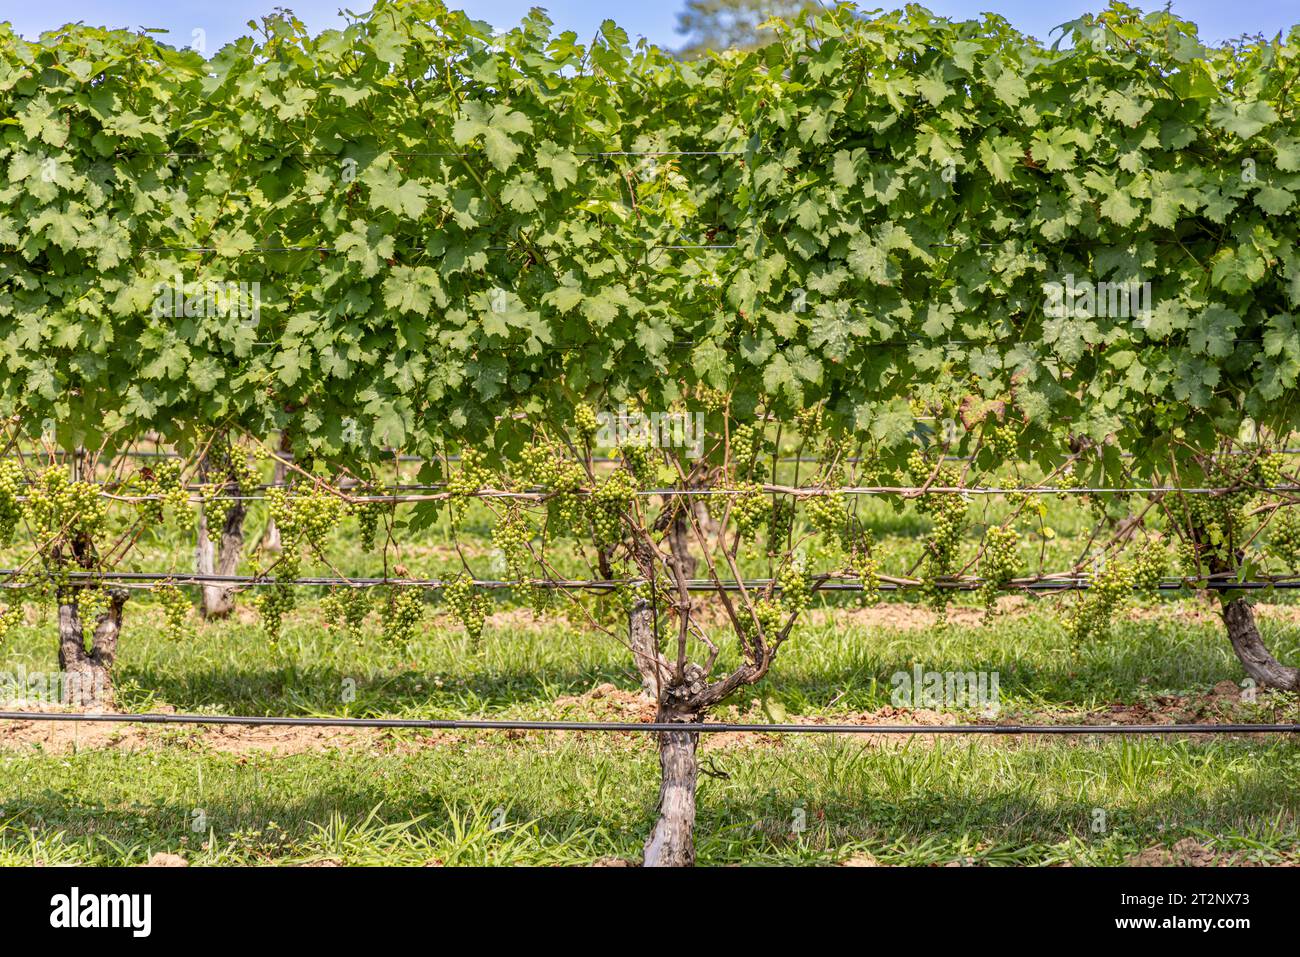 Detail image of grape vines at wolffer estate vineyards Stock Photo